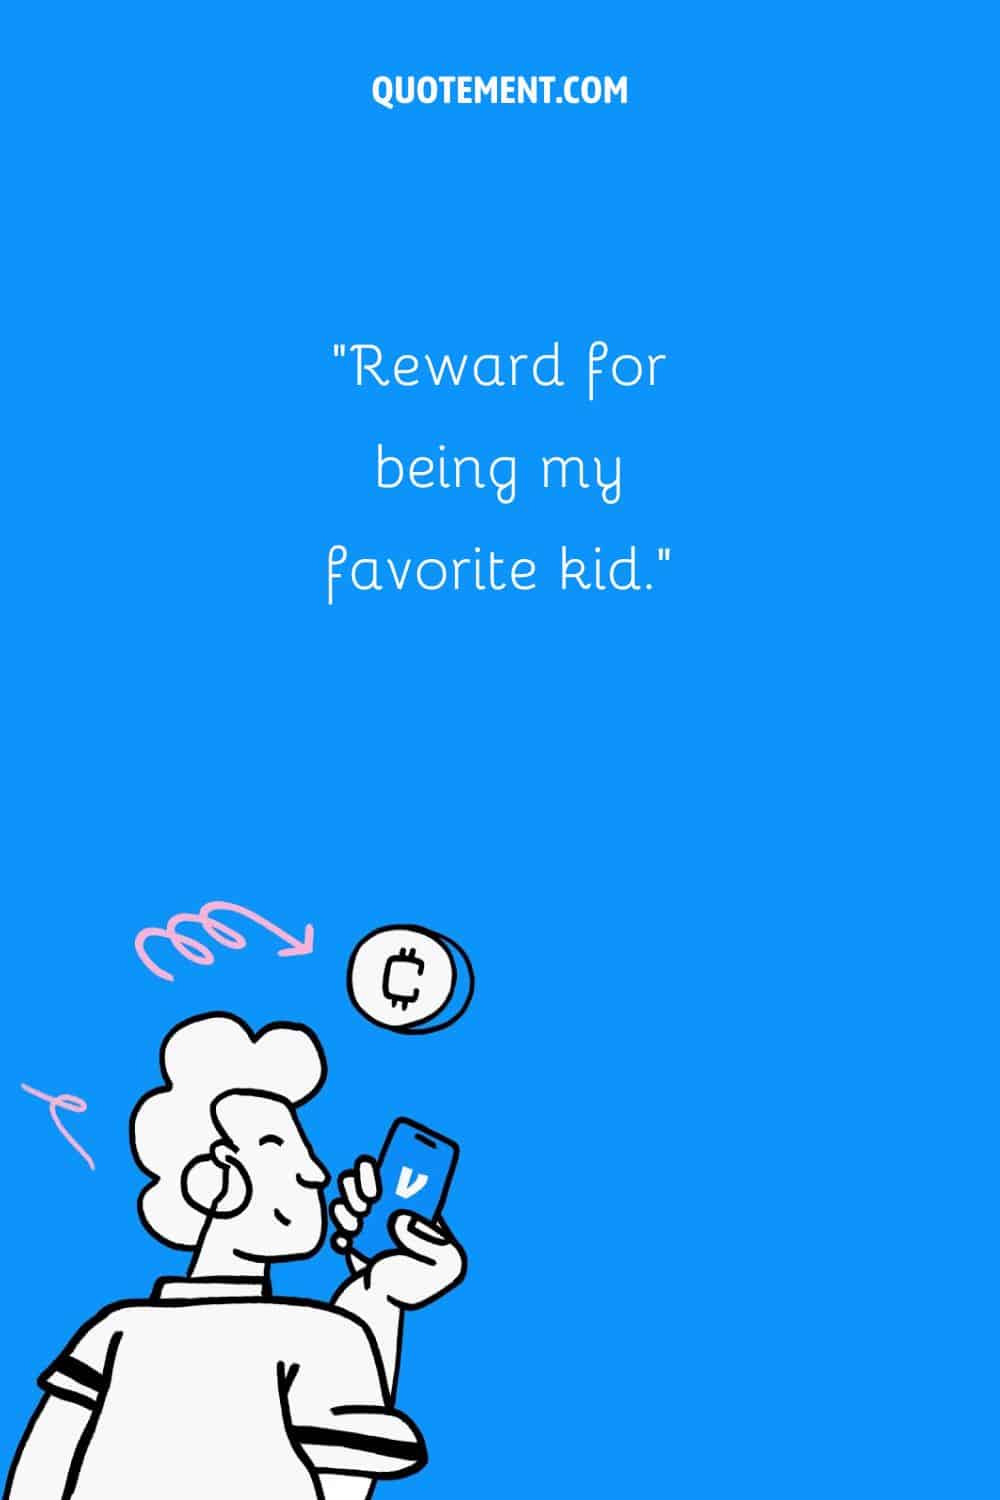 Reward for being my favorite kid